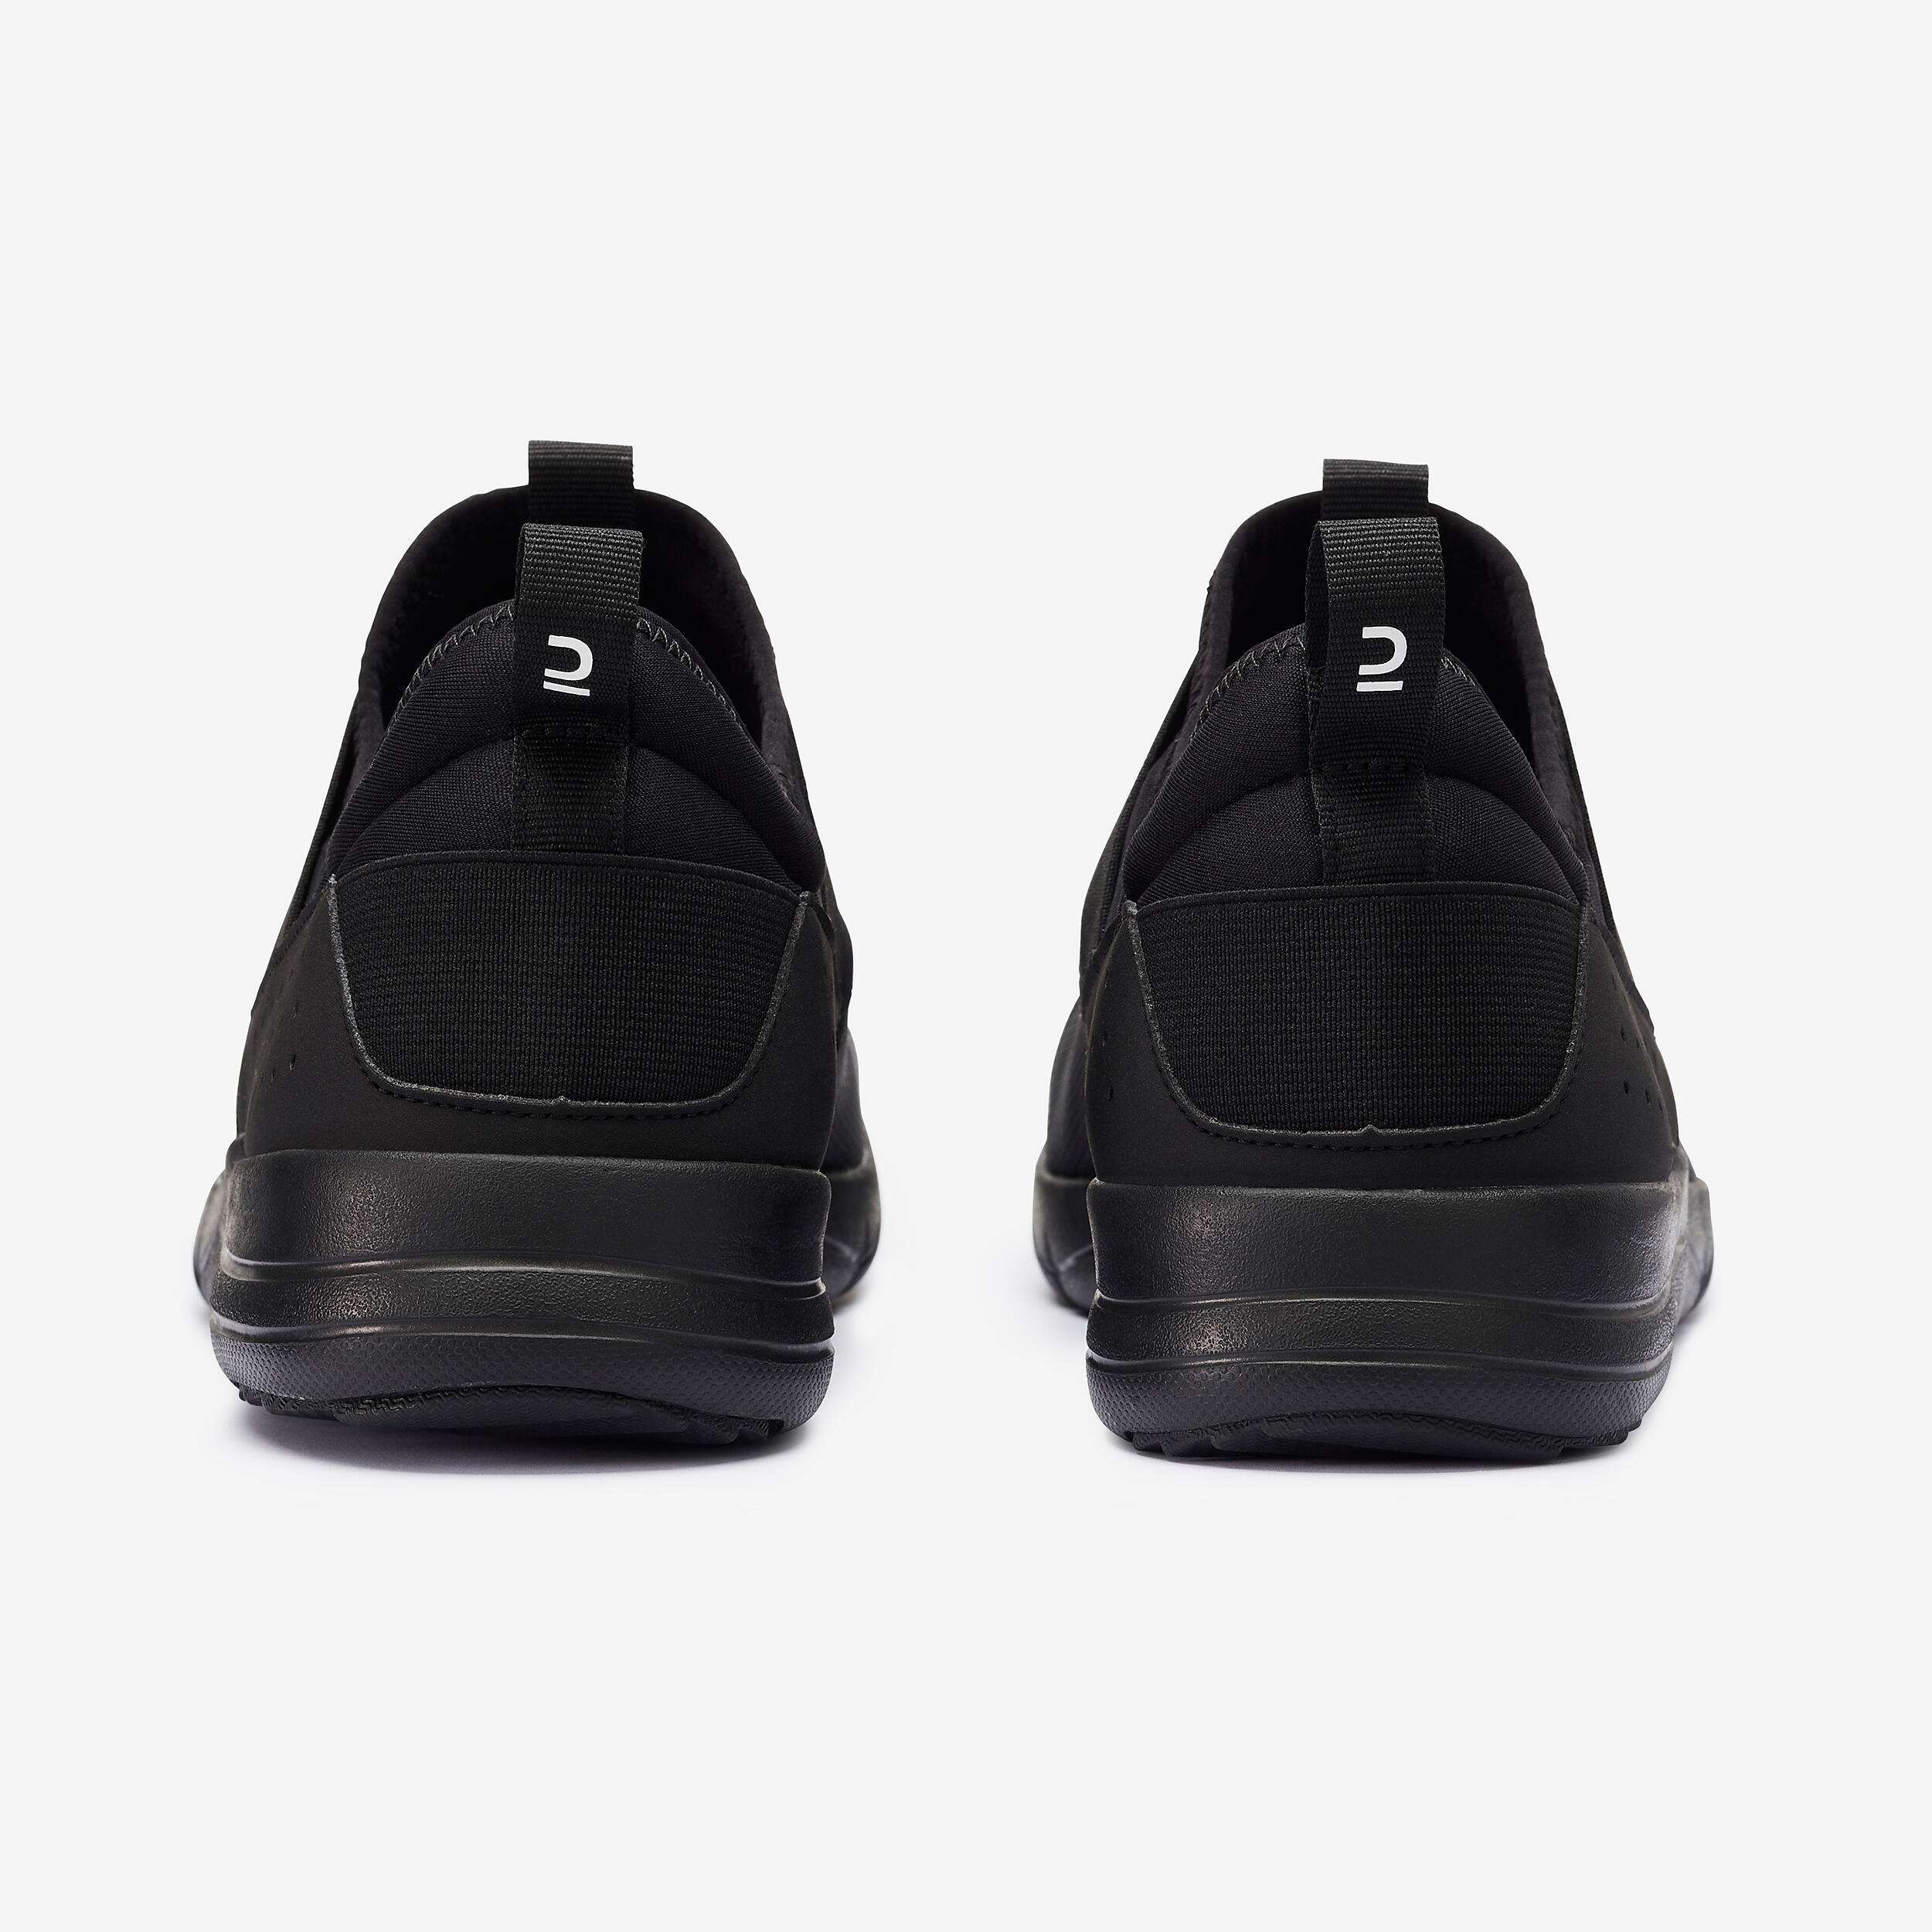 PW 160 Slip-On men's Fitness walking shoes - black 6/7